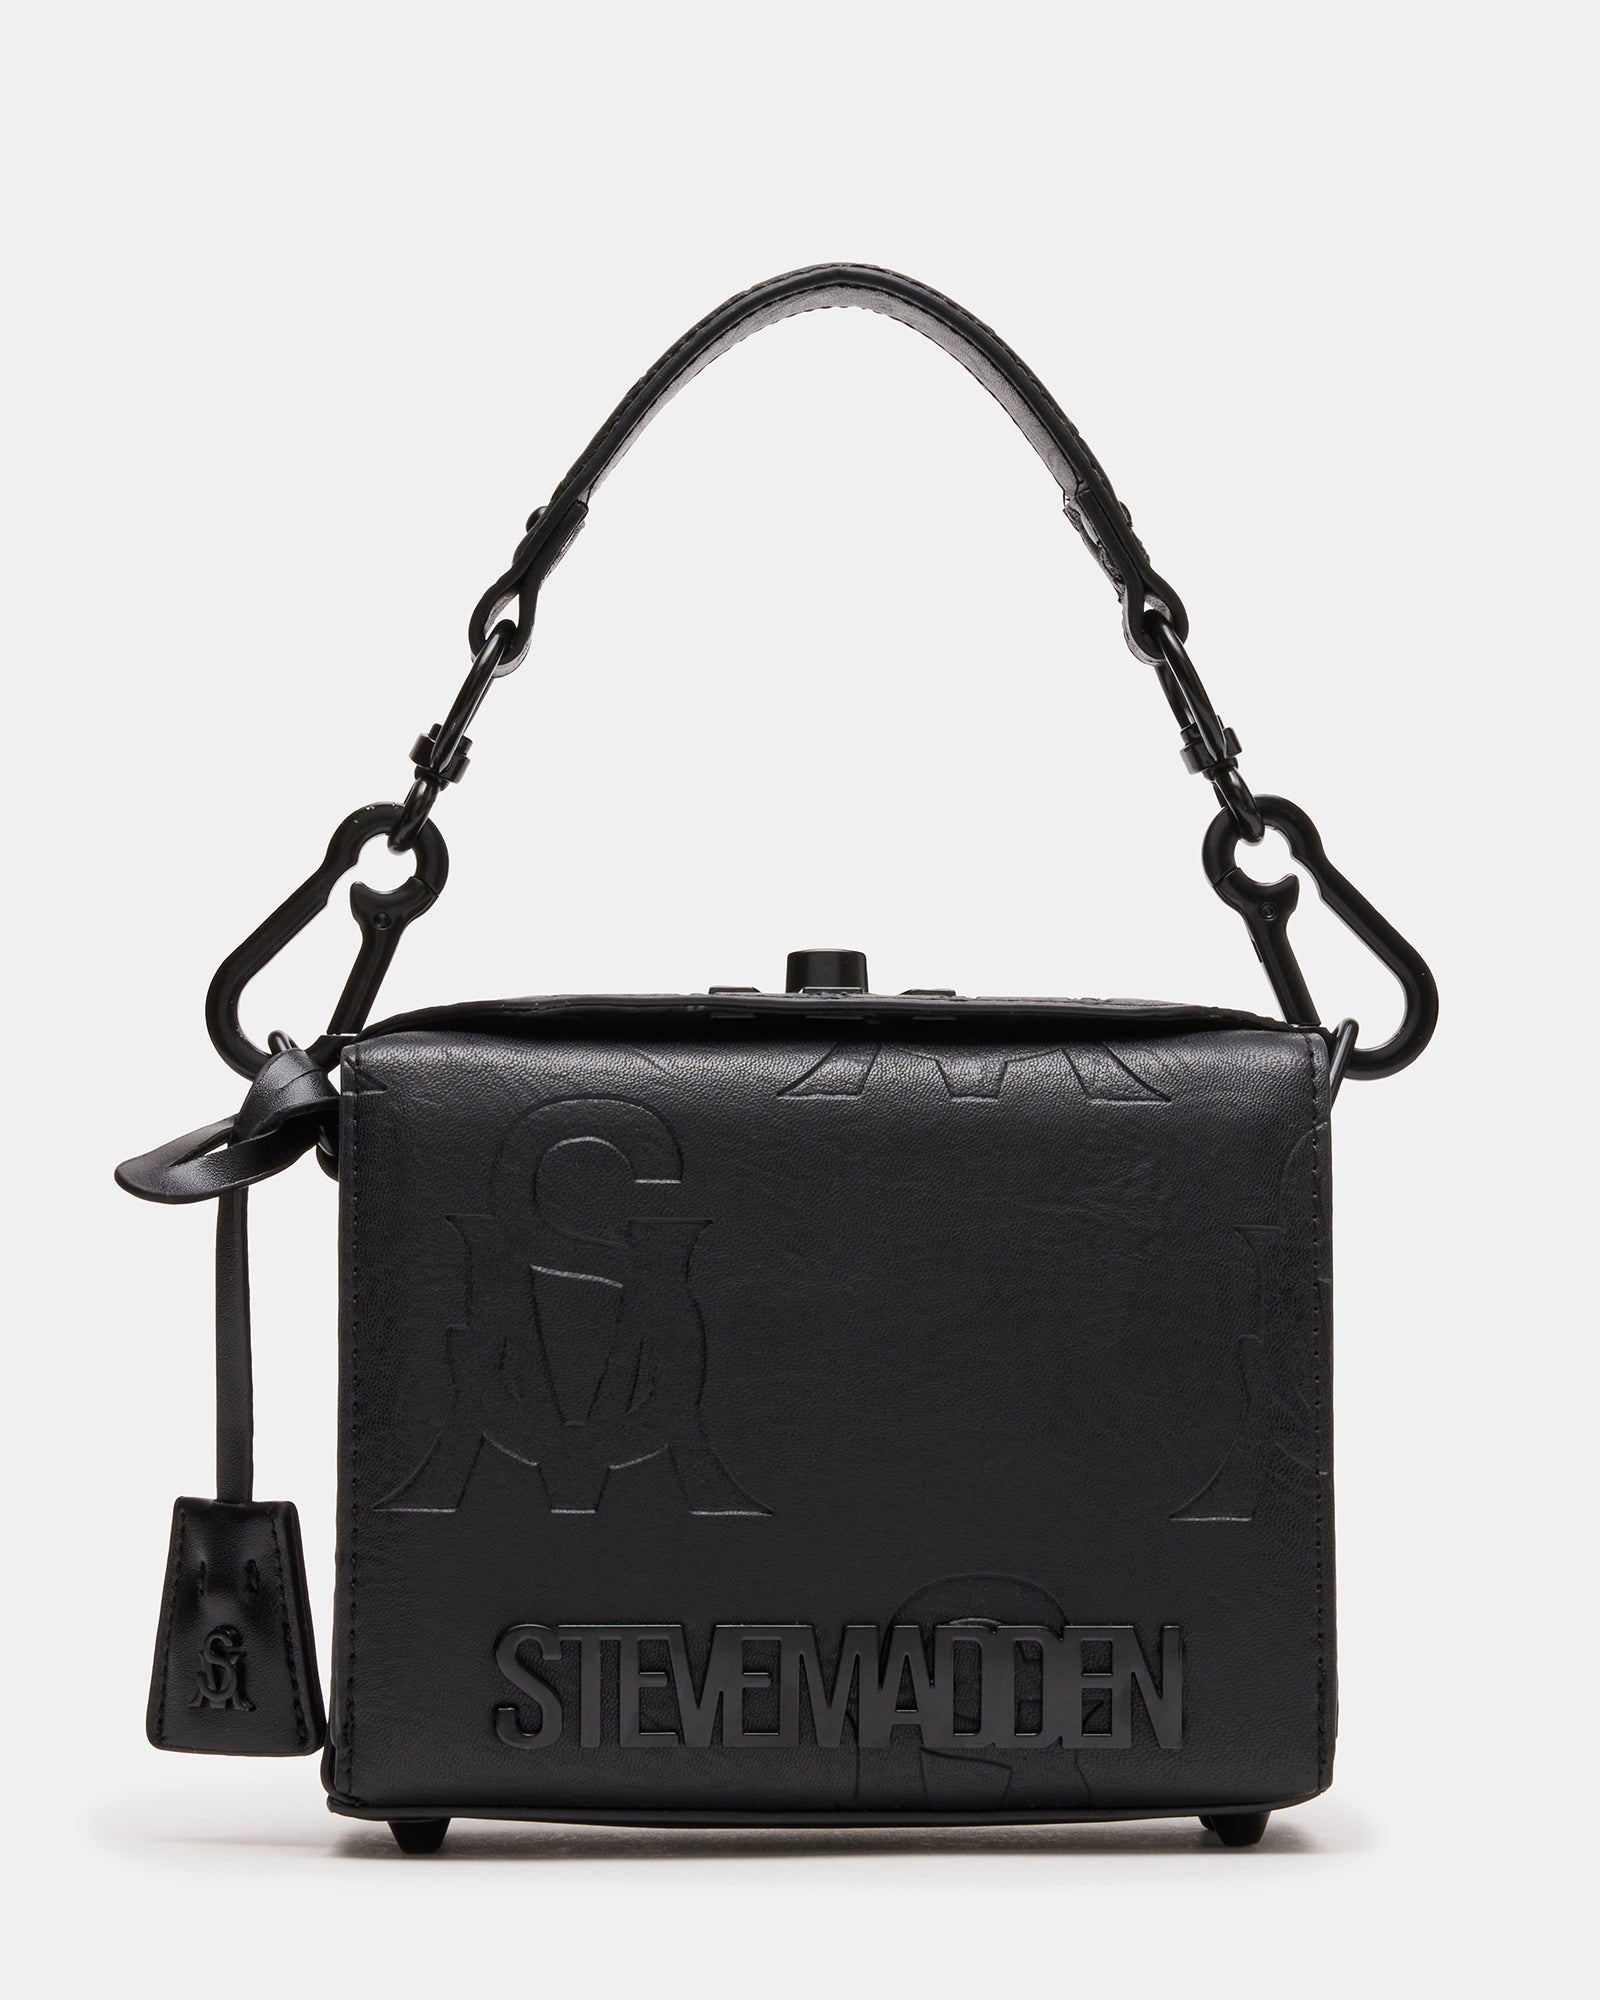 Steve Madden big ass purse - Bags & Luggage | Facebook Marketplace |  Facebook